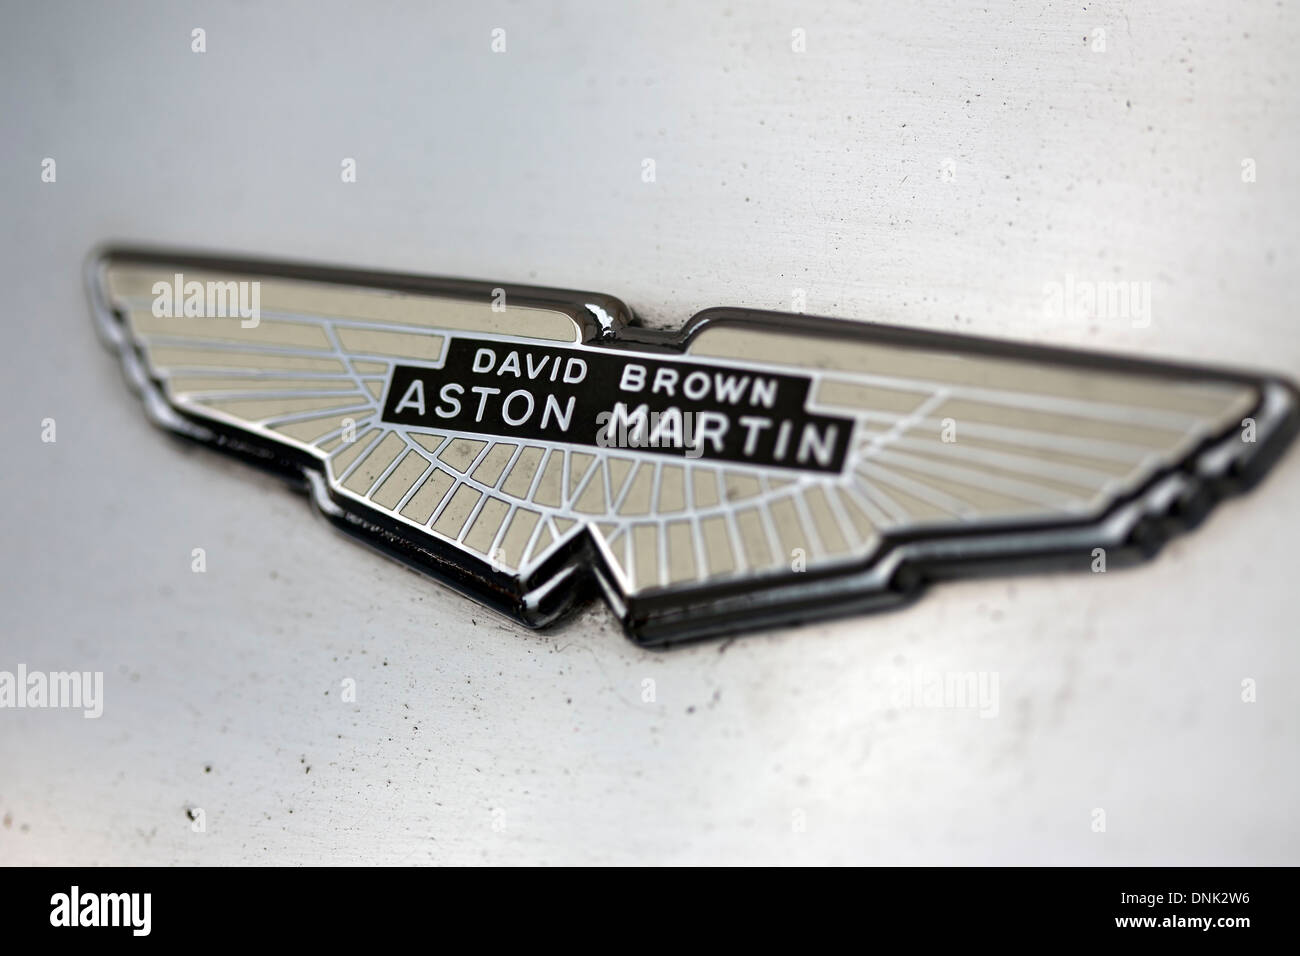 Aston Martin Oldtimer Auto Emblem Stockfotografie - Alamy